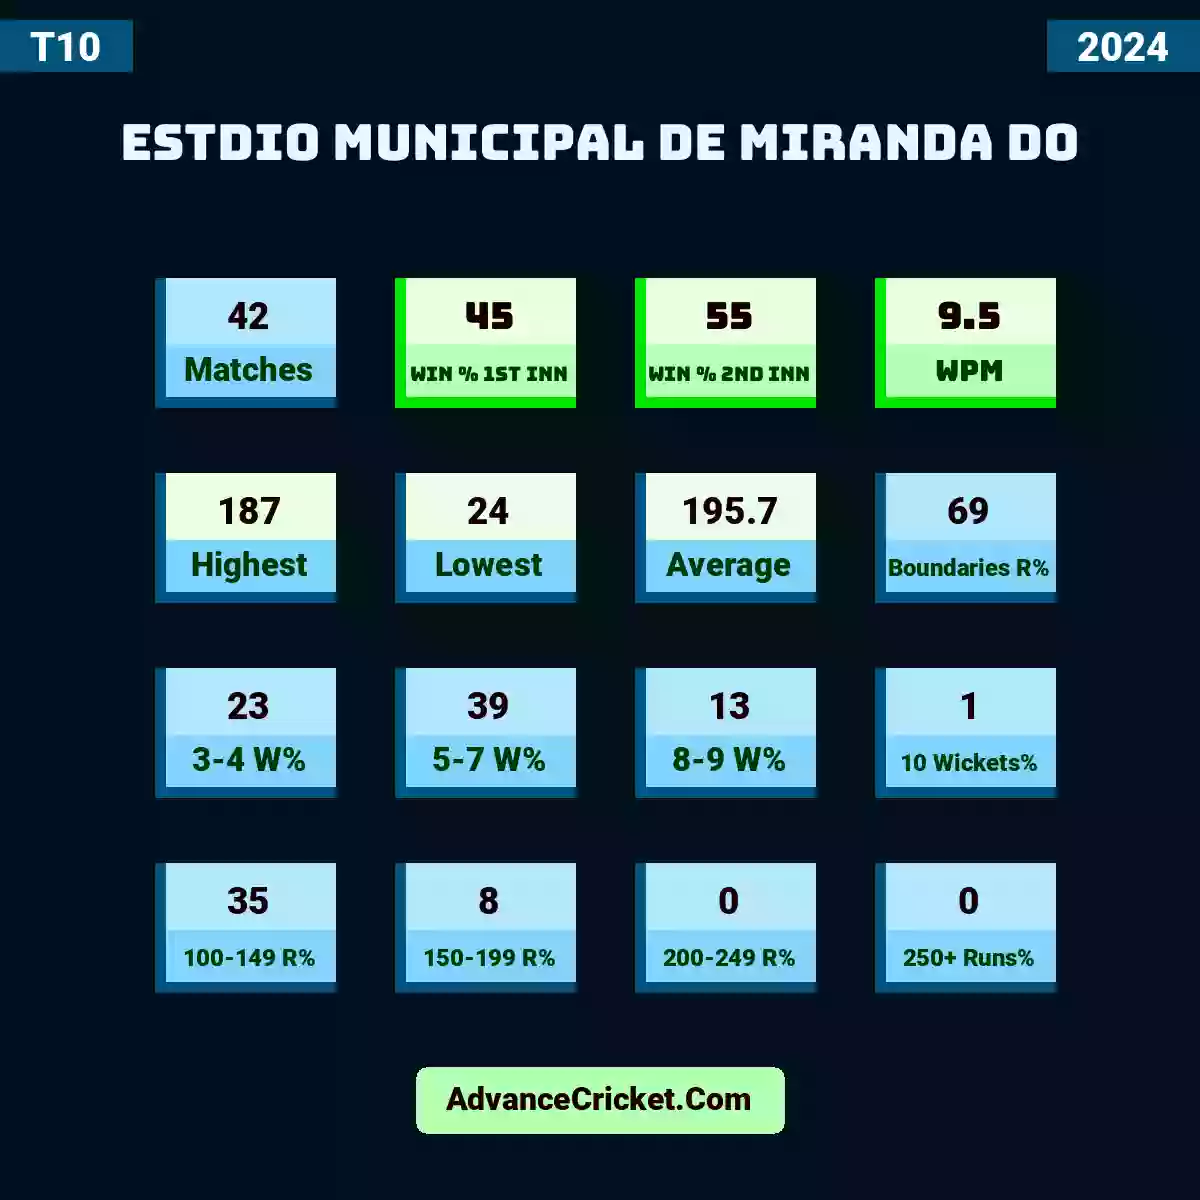 Image showing Estdio Municipal de Miranda do T10 2024 with Matches: 38, Win % 1st Inn: 47, Win % 2nd Inn: 53, WPM: 9.3, Highest: 187, Lowest: 24, Average: 192.0, Boundaries R%: 68.3, 3-4 W%: 24, 5-7 W%: 38, 8-9 W%: 13, 10 Wickets%: 0, 100-149 R%: 33, 150-199 R%: 8, 200-249 R%: 0, 250+ Runs%: 0.